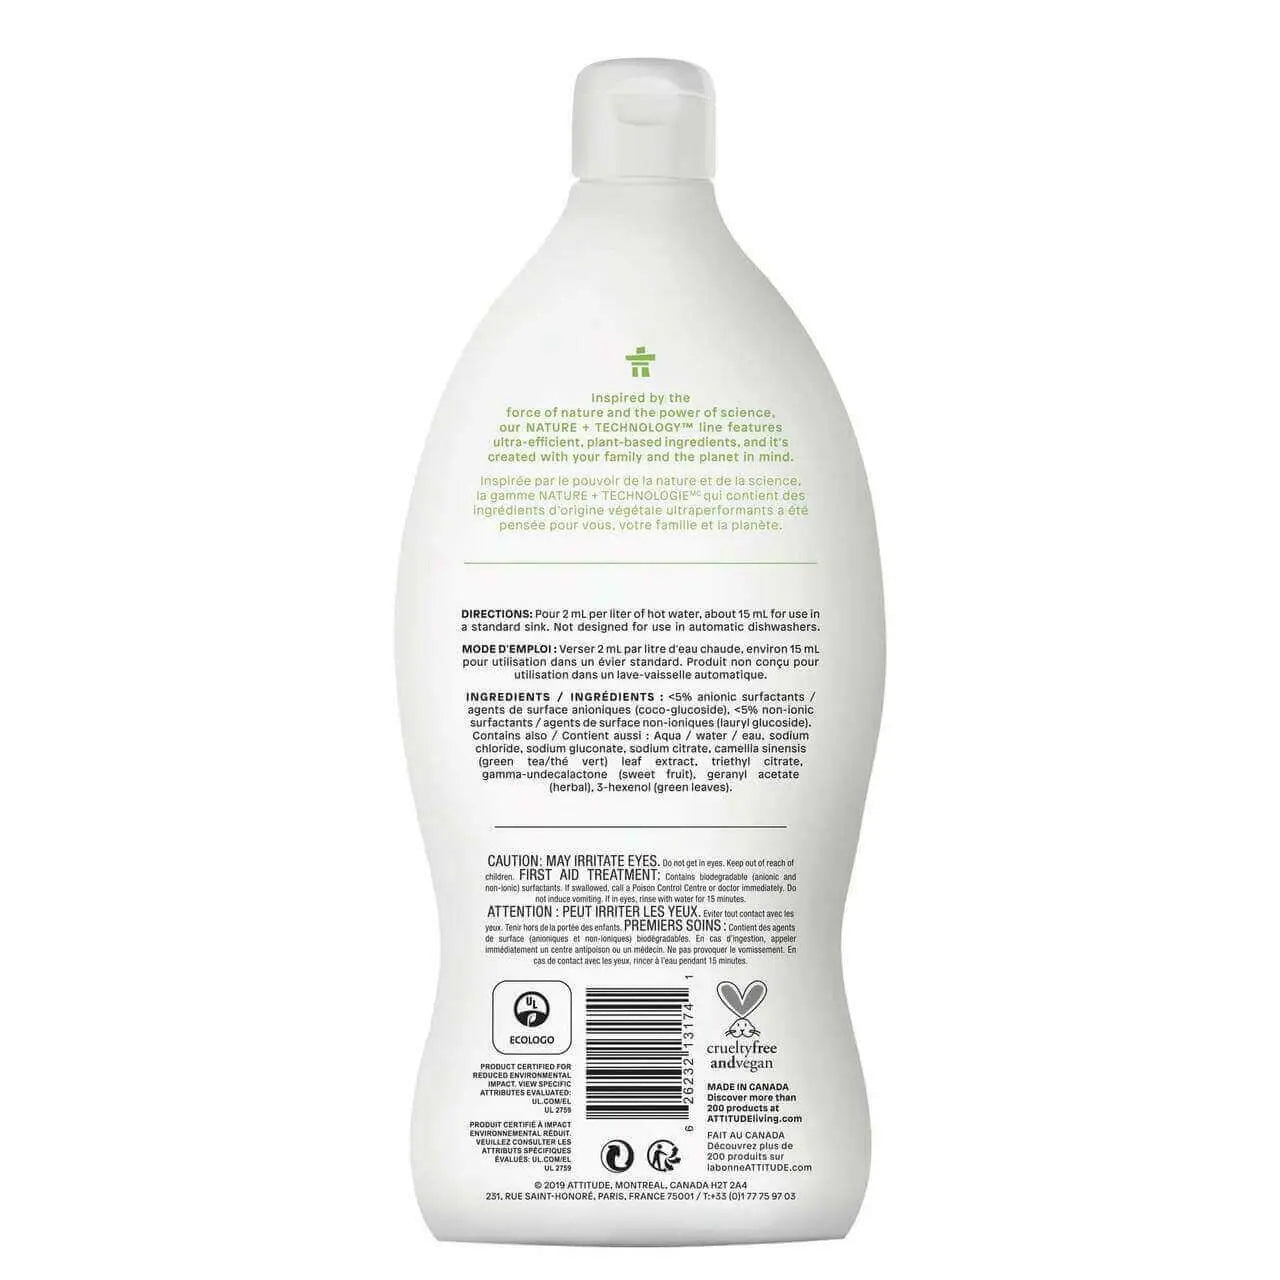 Attitude Dishwashing Liquid GREEN APPLE 700 ml - Nutrition Plus